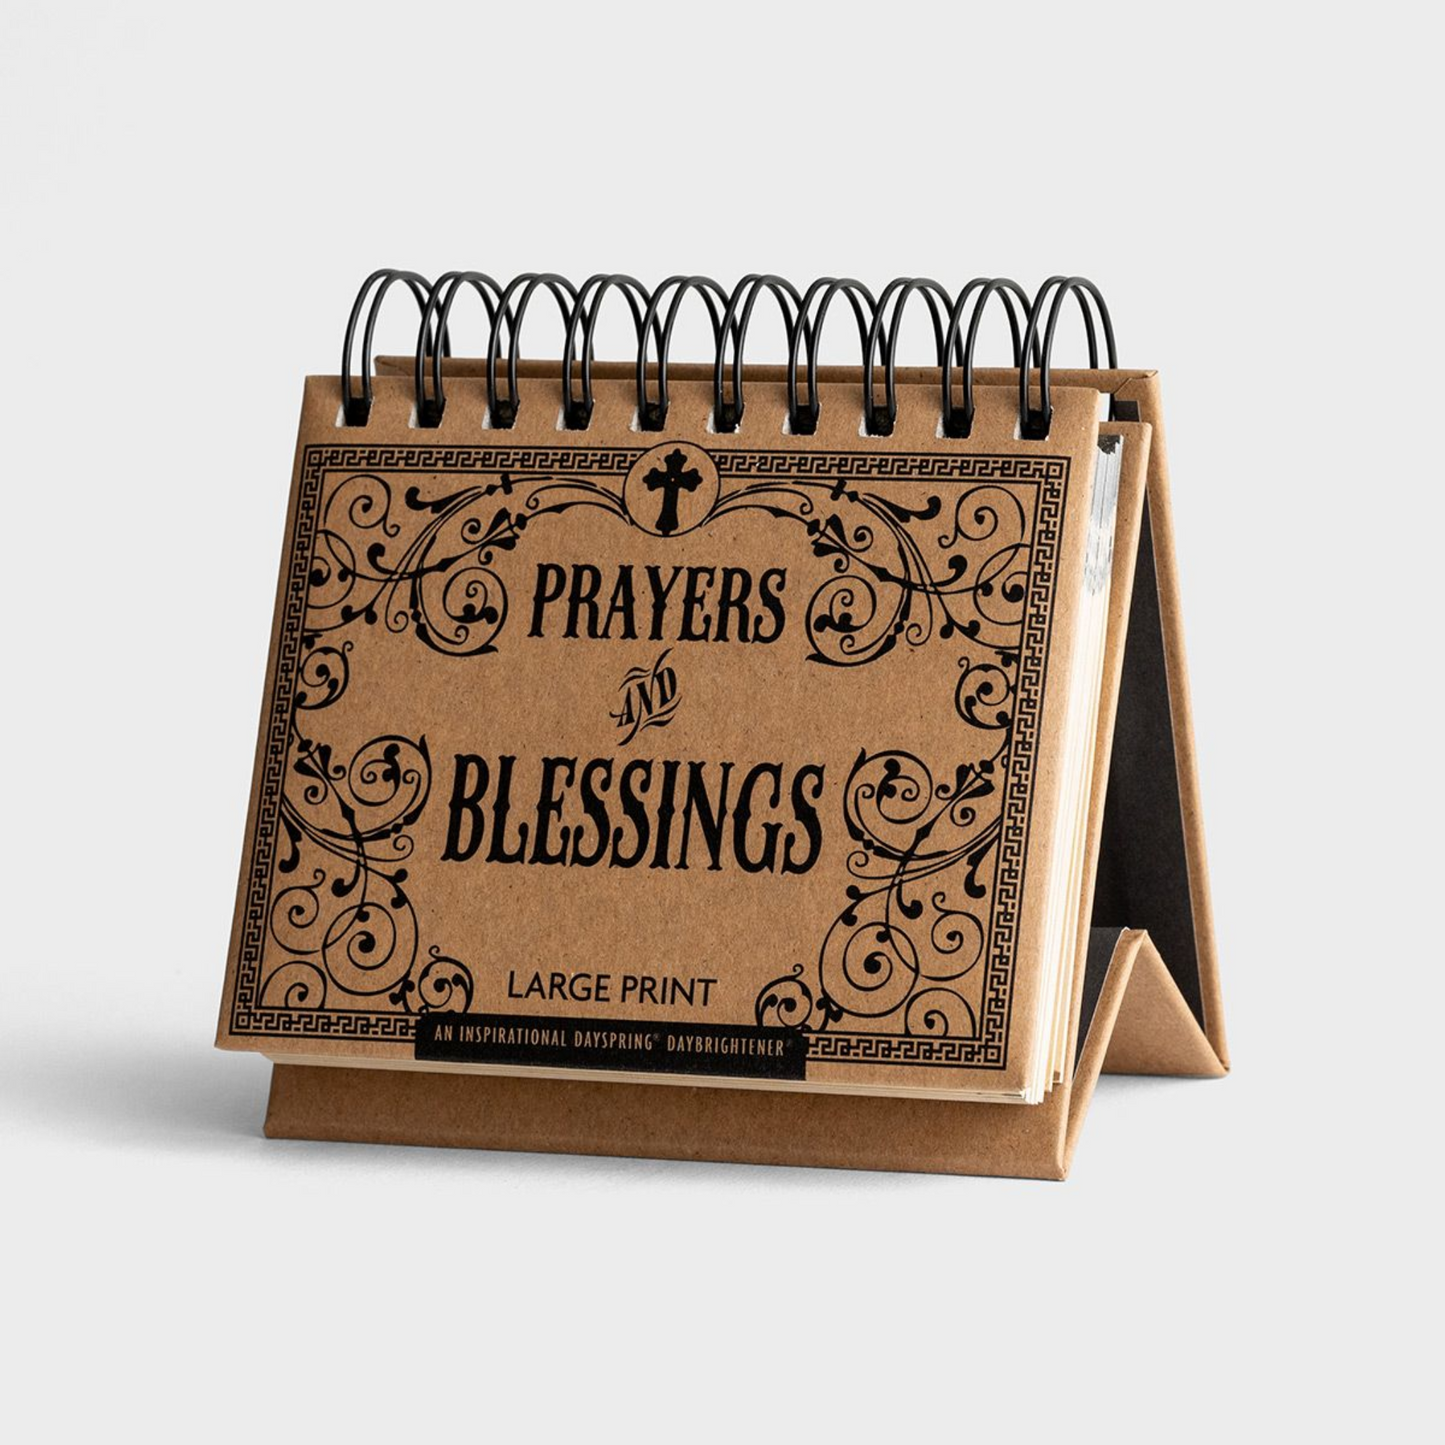 Perpetual Calendar - Prayers & Blessings, Large Print (#34832)